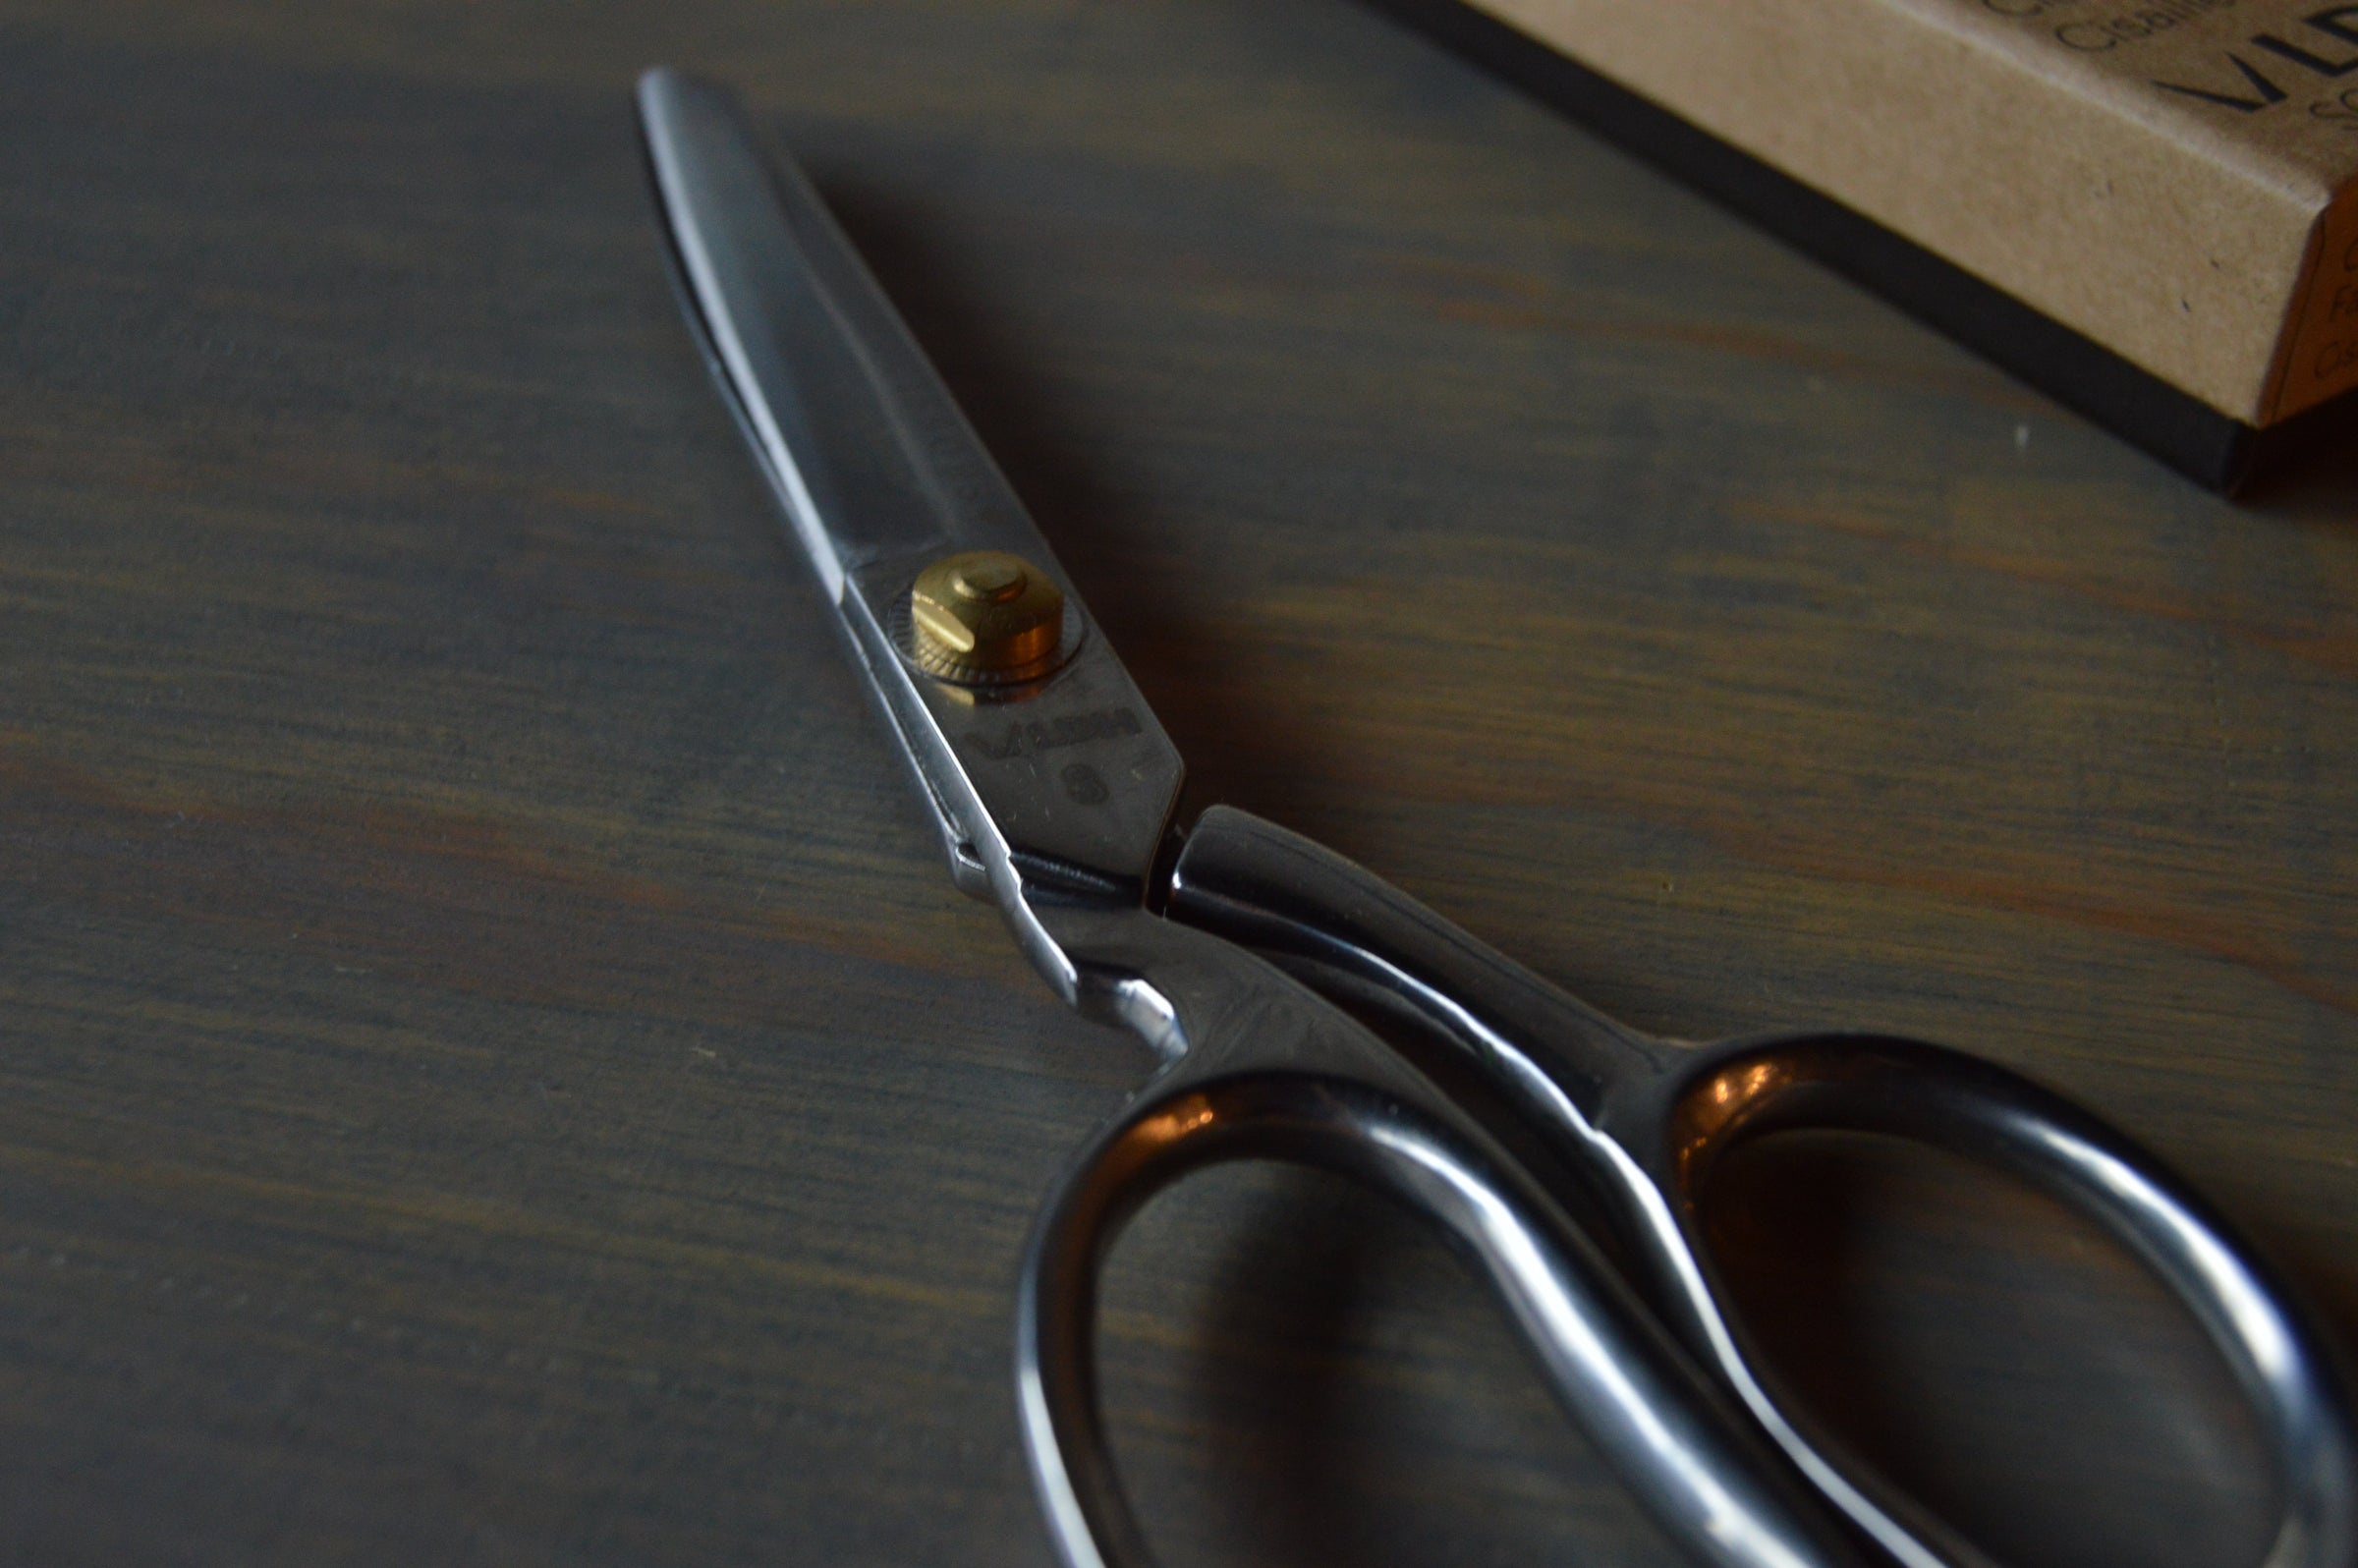 8 True Left-Handed Classic Fabric Shears - LDH Scissors